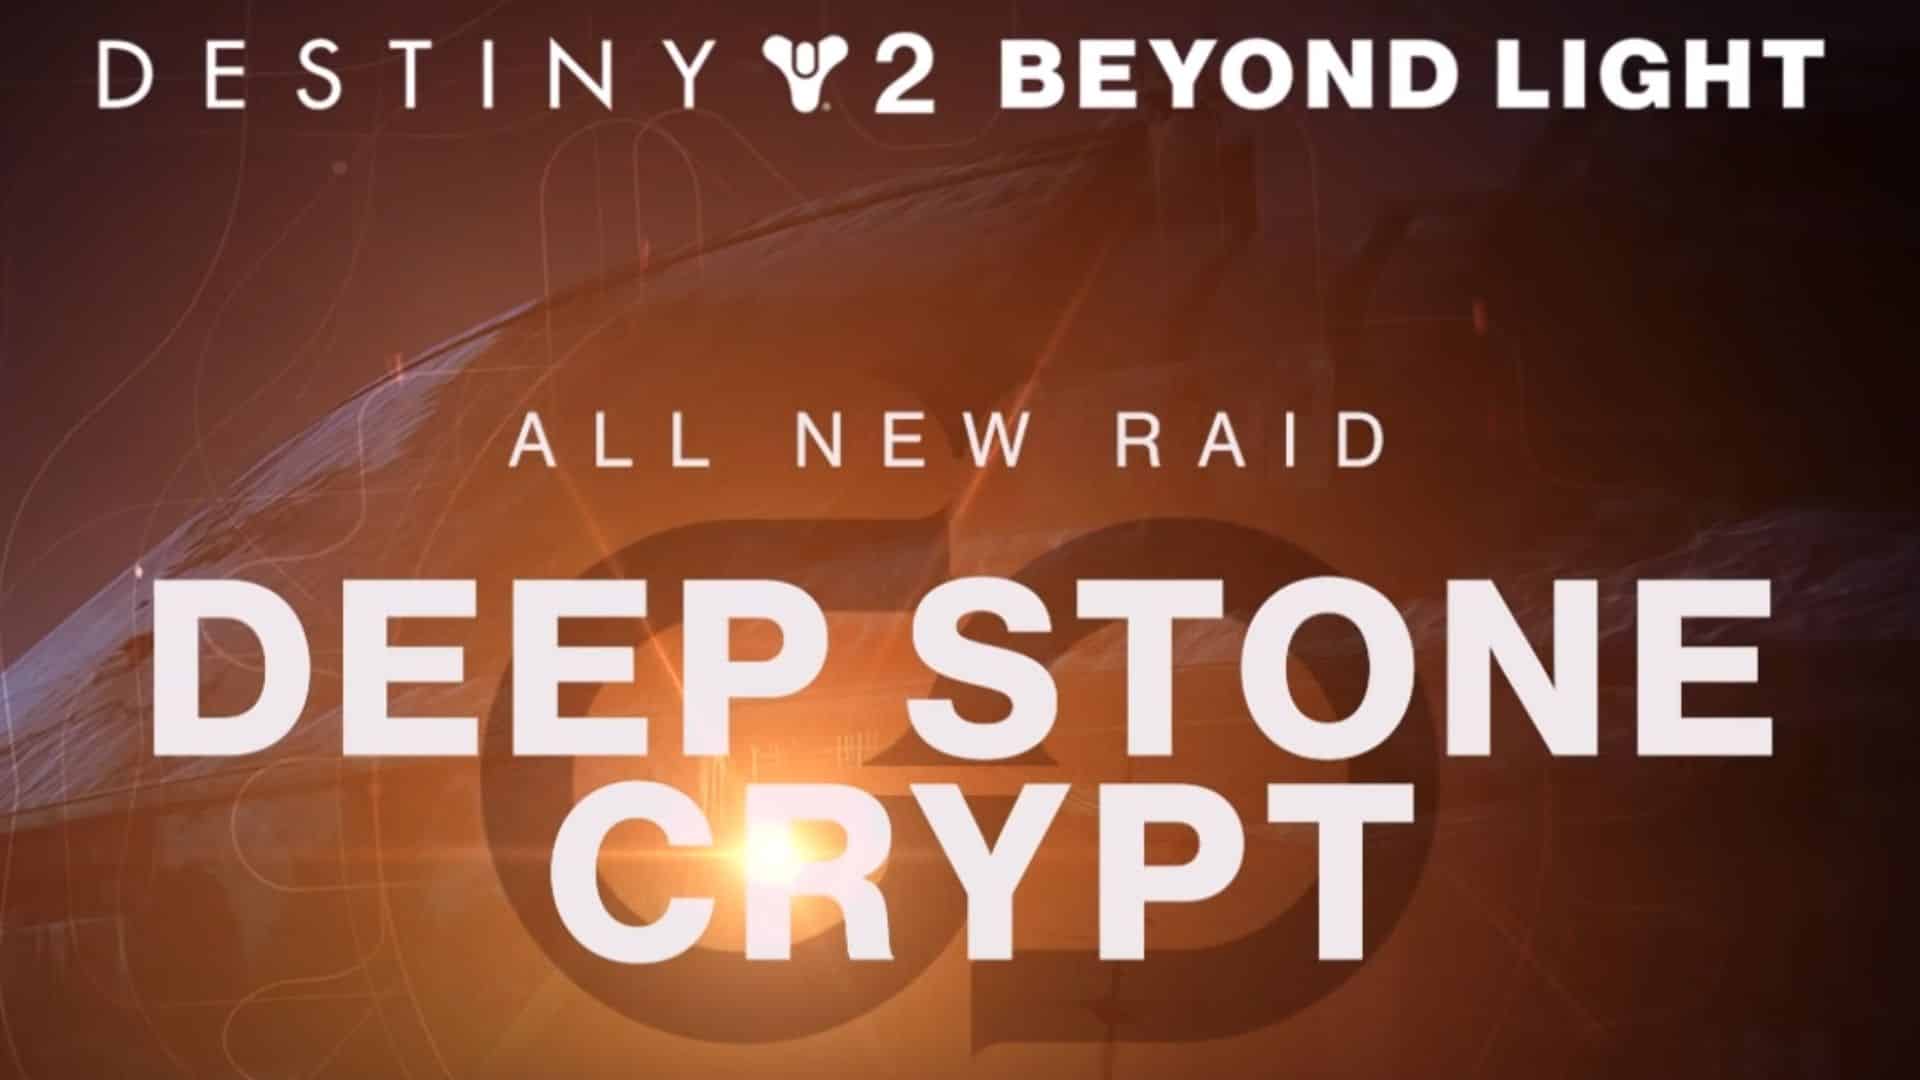 deep stone crypt raid in destiny 2 beyond light